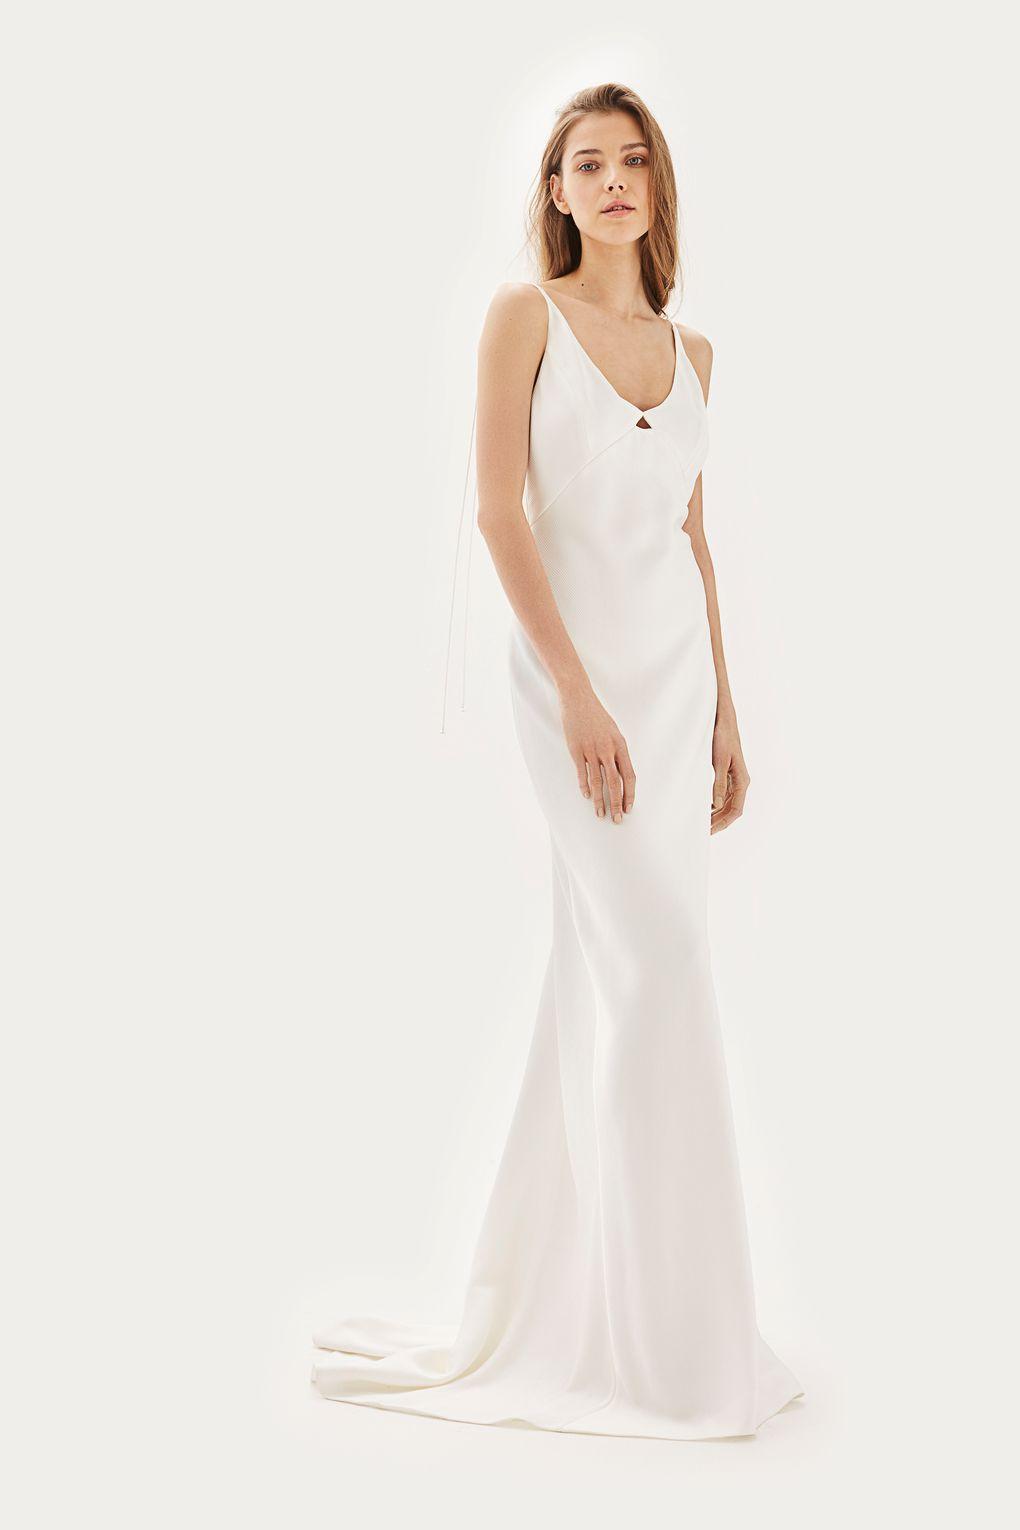 Topshop Bride Ivory V-Neck Satin Sheath Gown US 6 / UK 10 $650 NEW